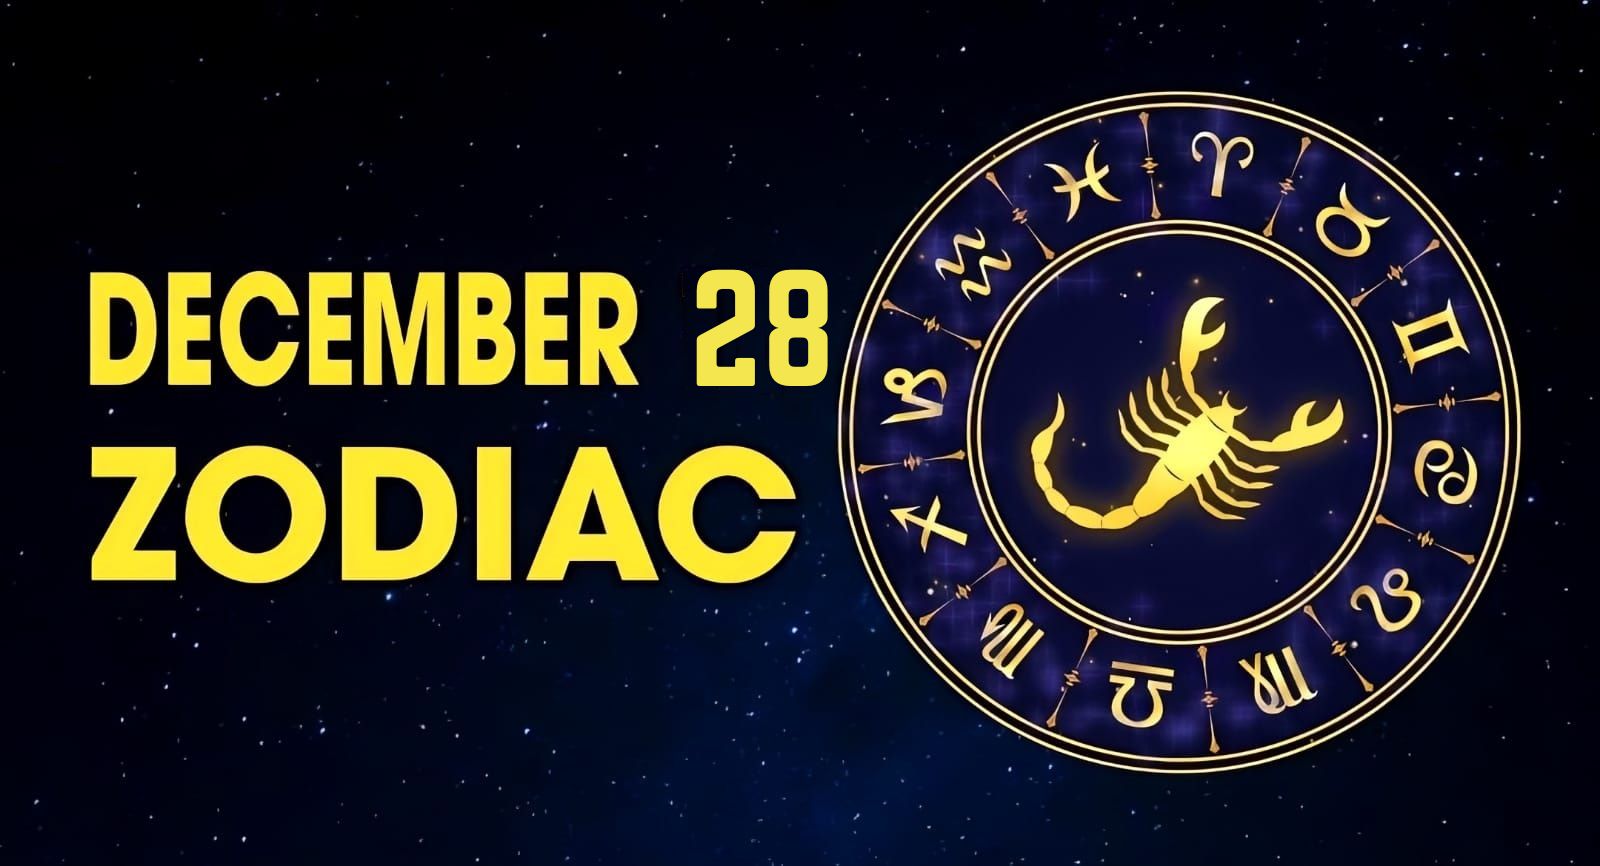 December 28 Zodiac